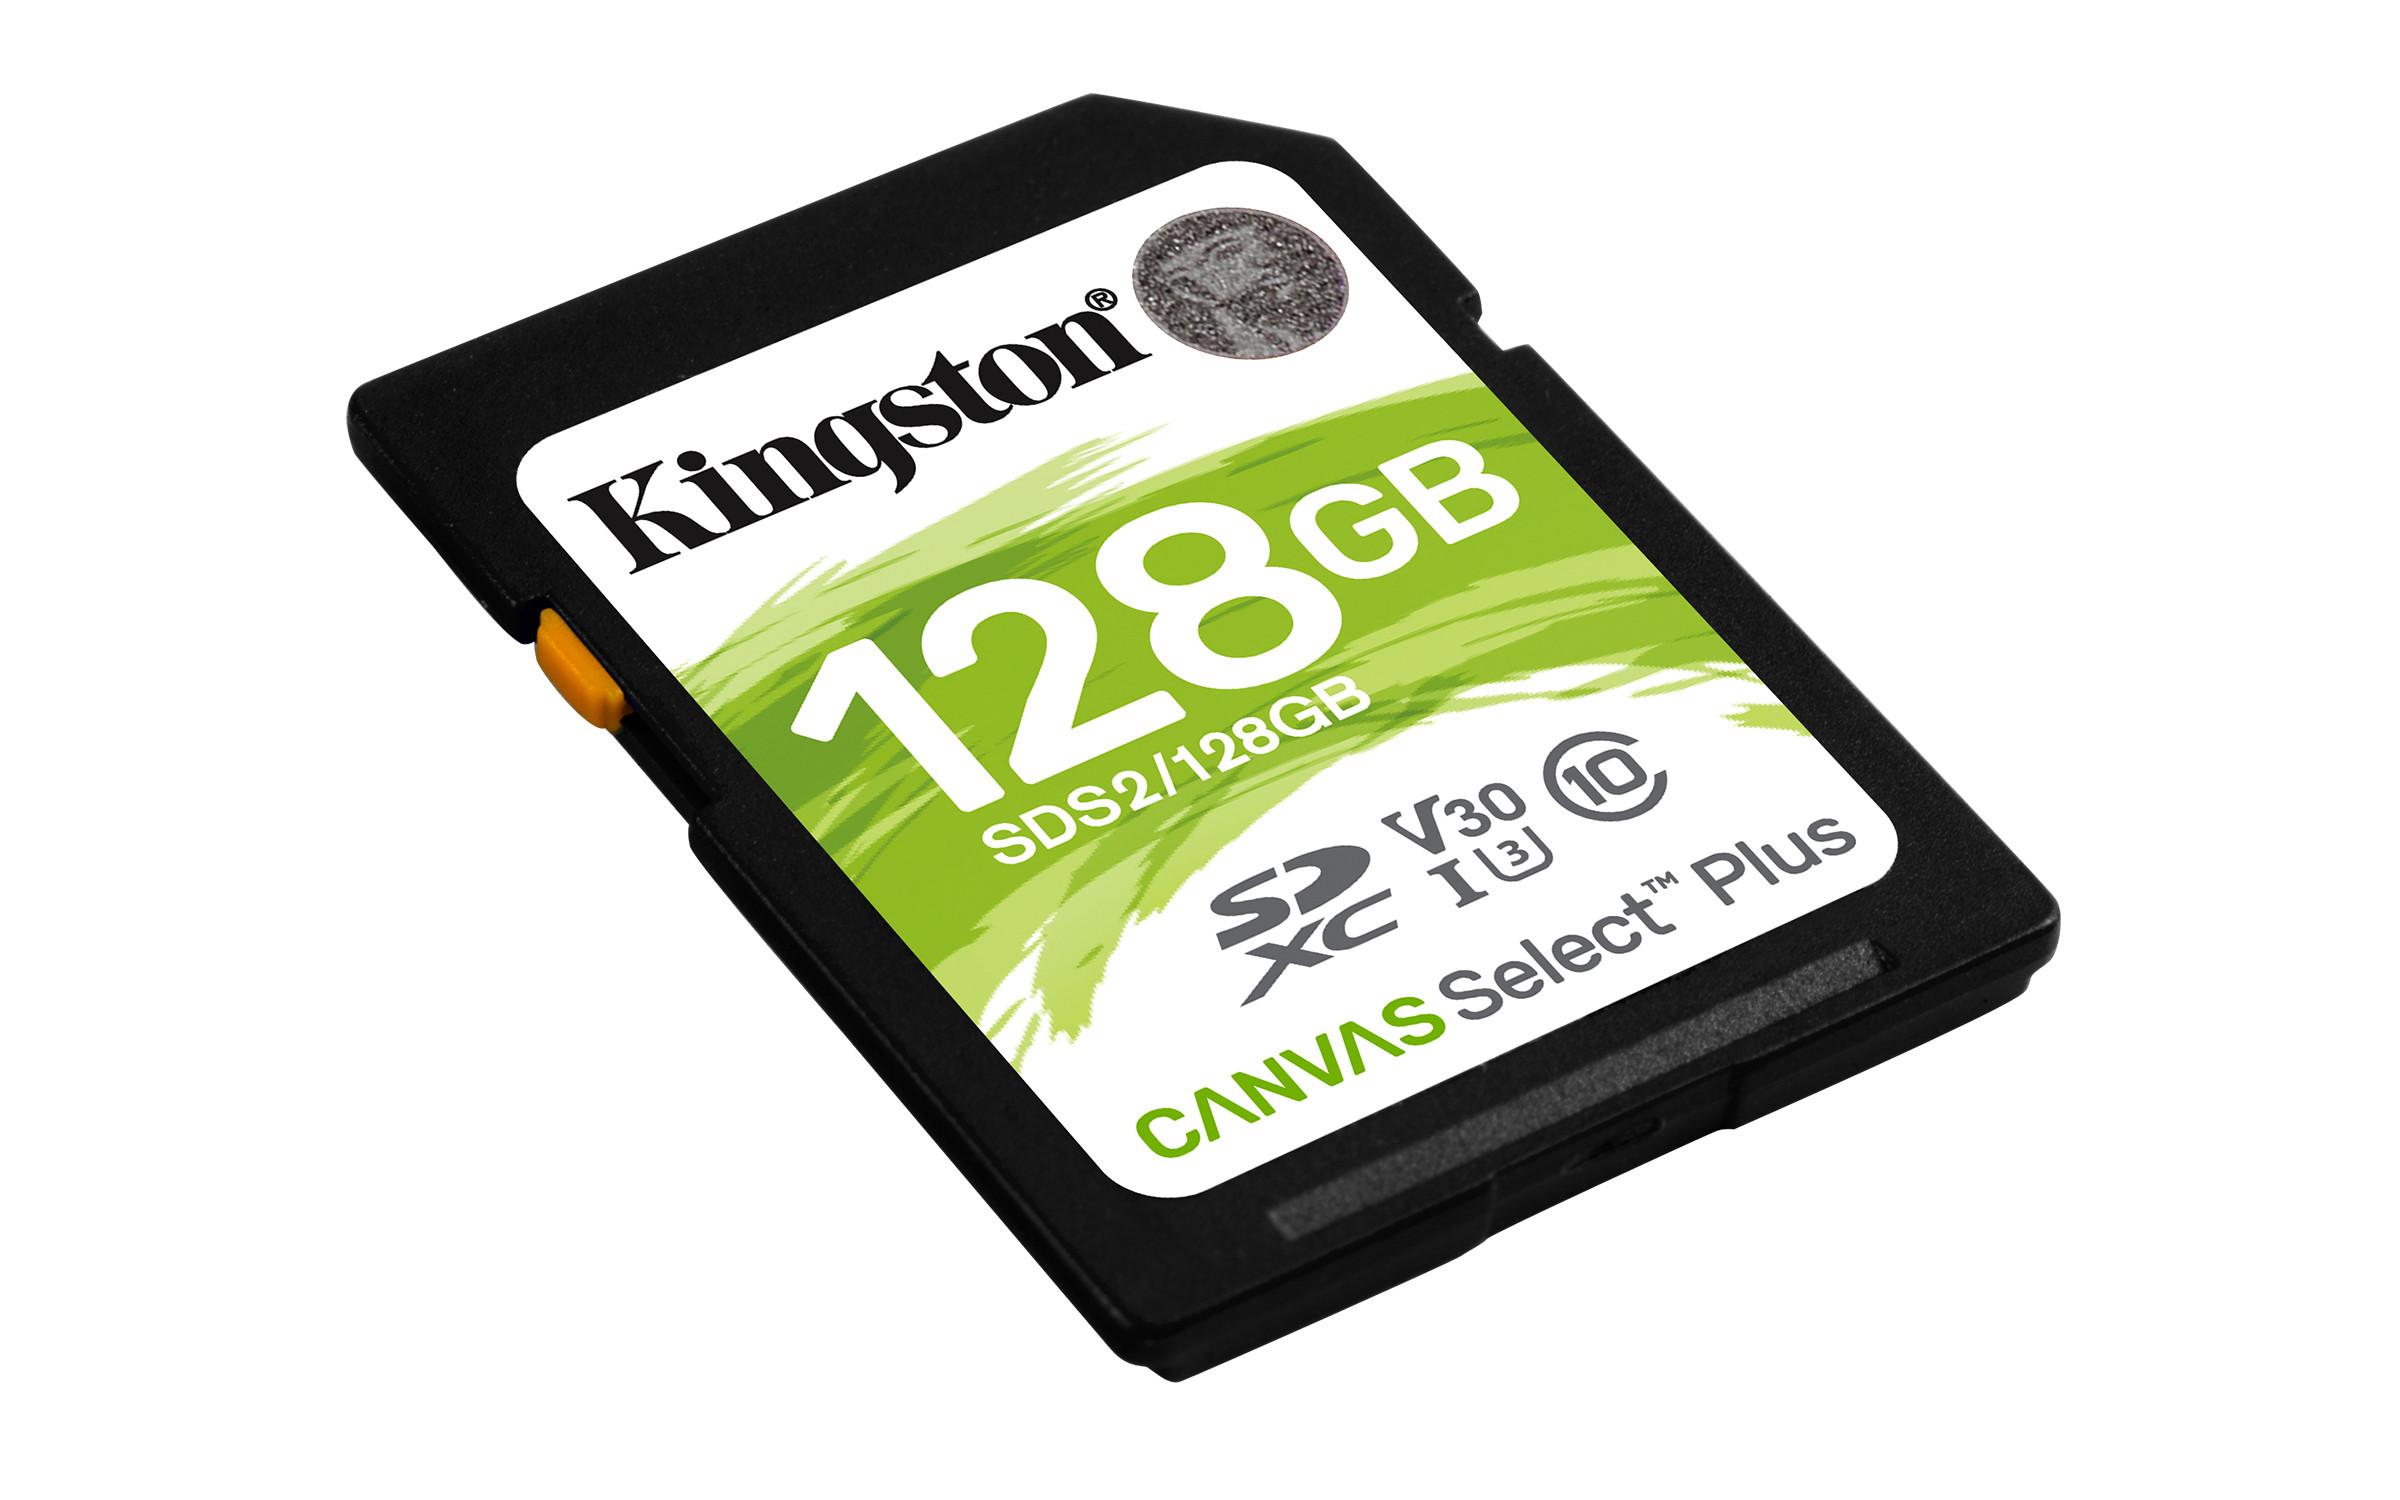 Kingston  Kingston Technology Scheda SDXC Canvas Select Plus 100R C10 UHS-I U3 V30 da 128GB 